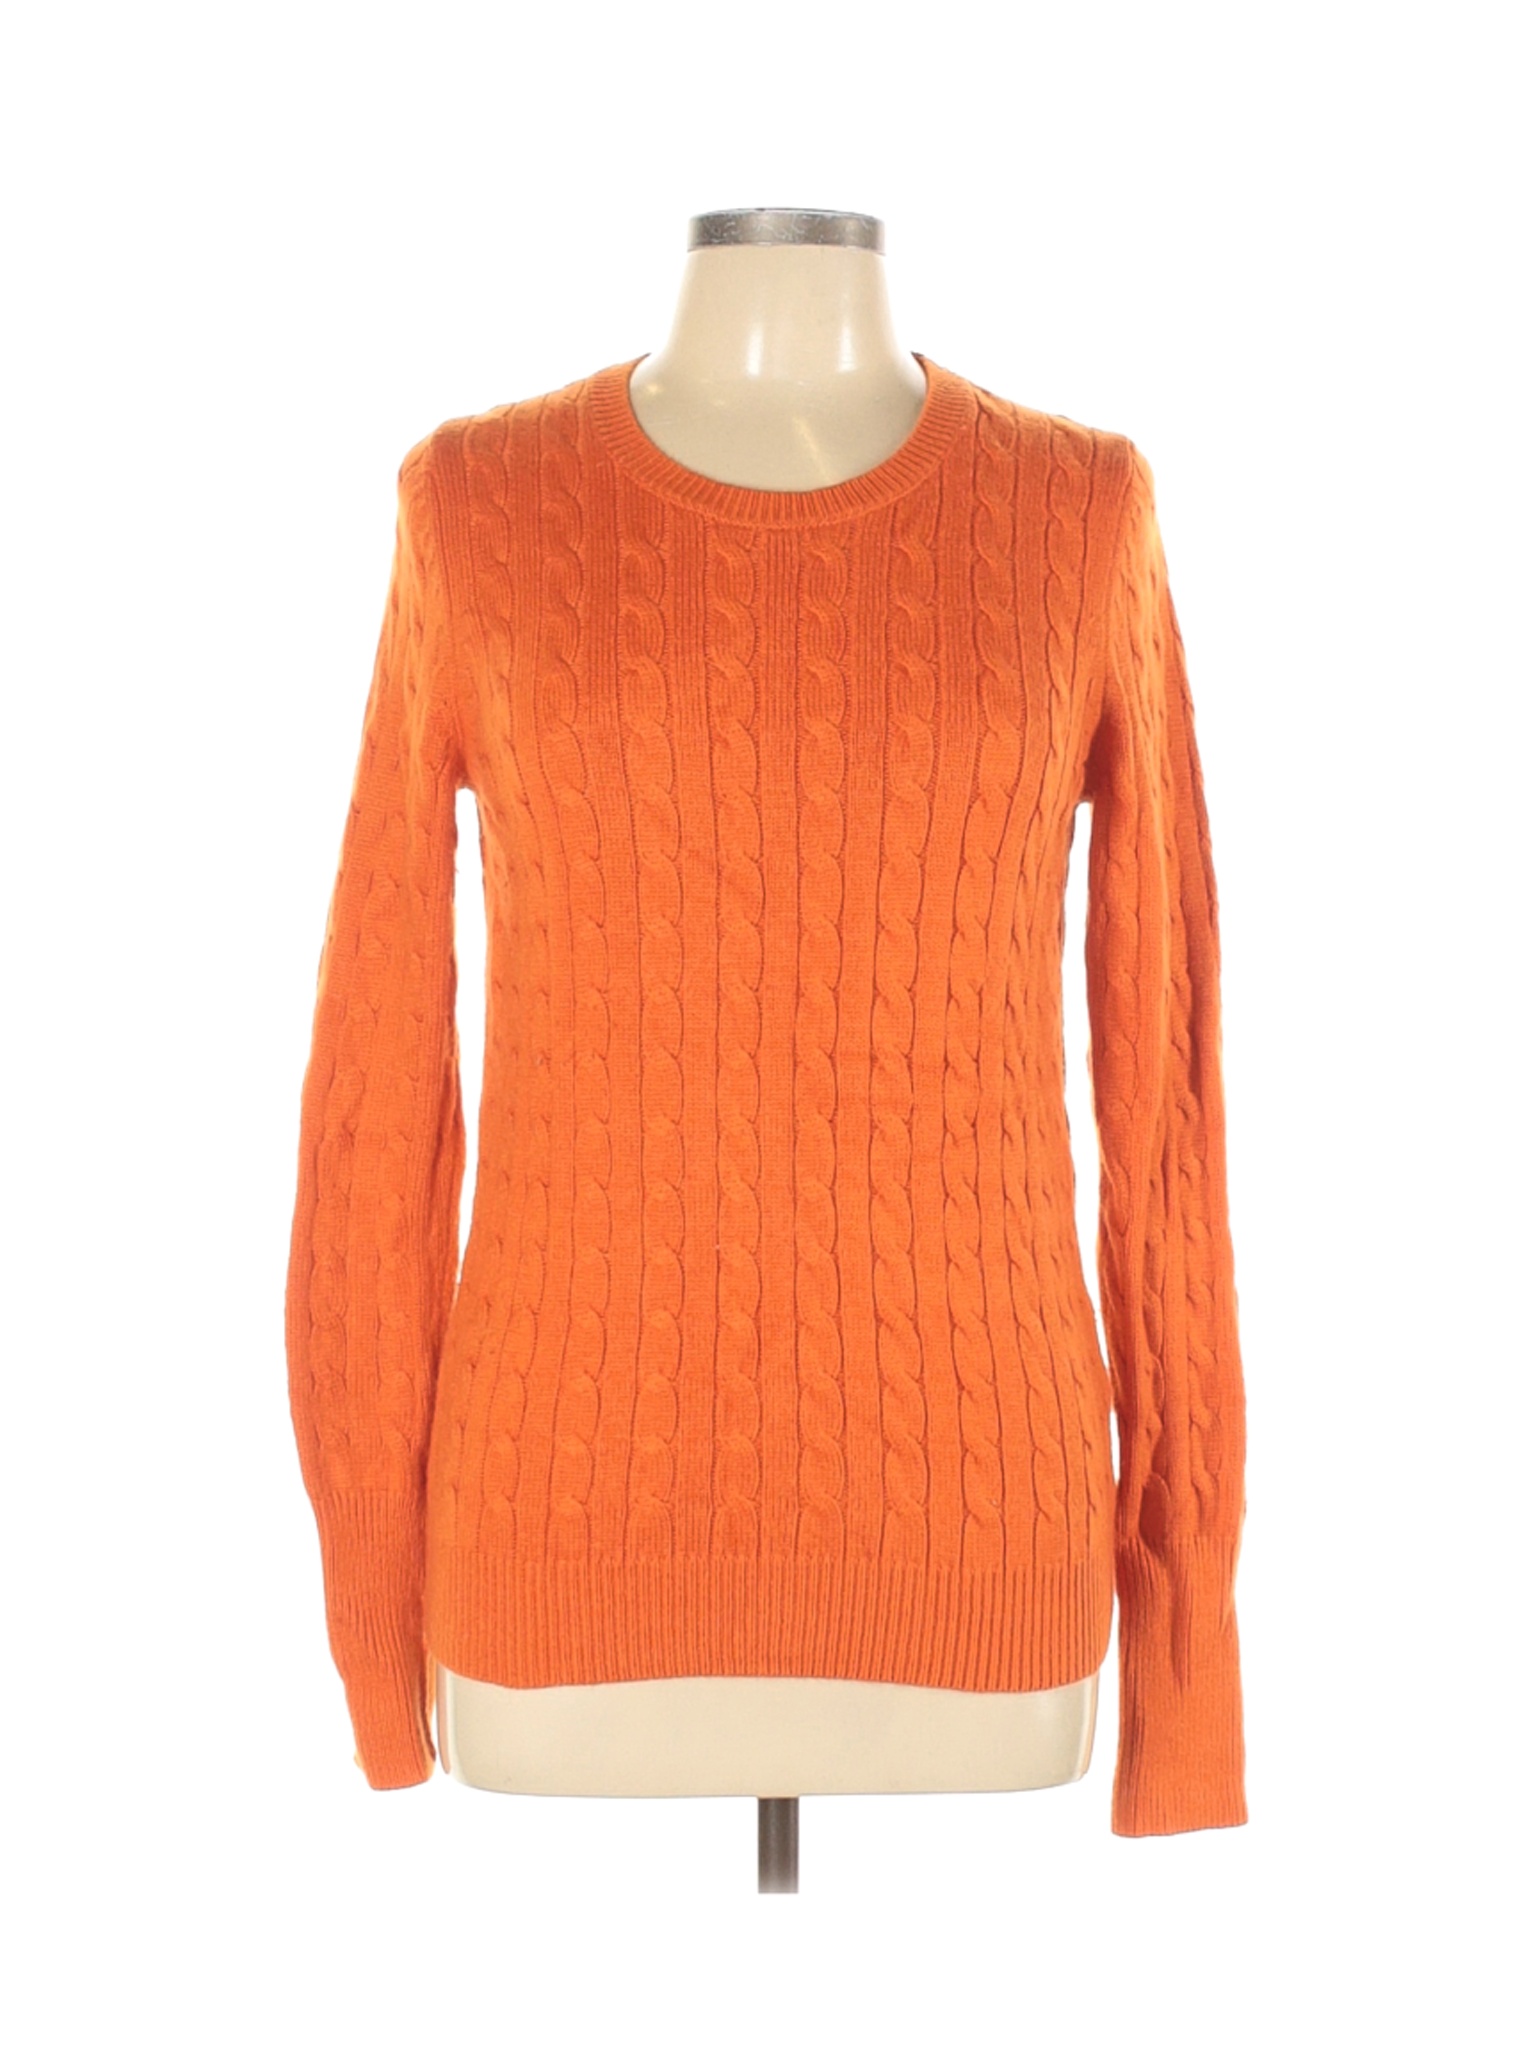 Gap Women Orange Pullover Sweater L | eBay